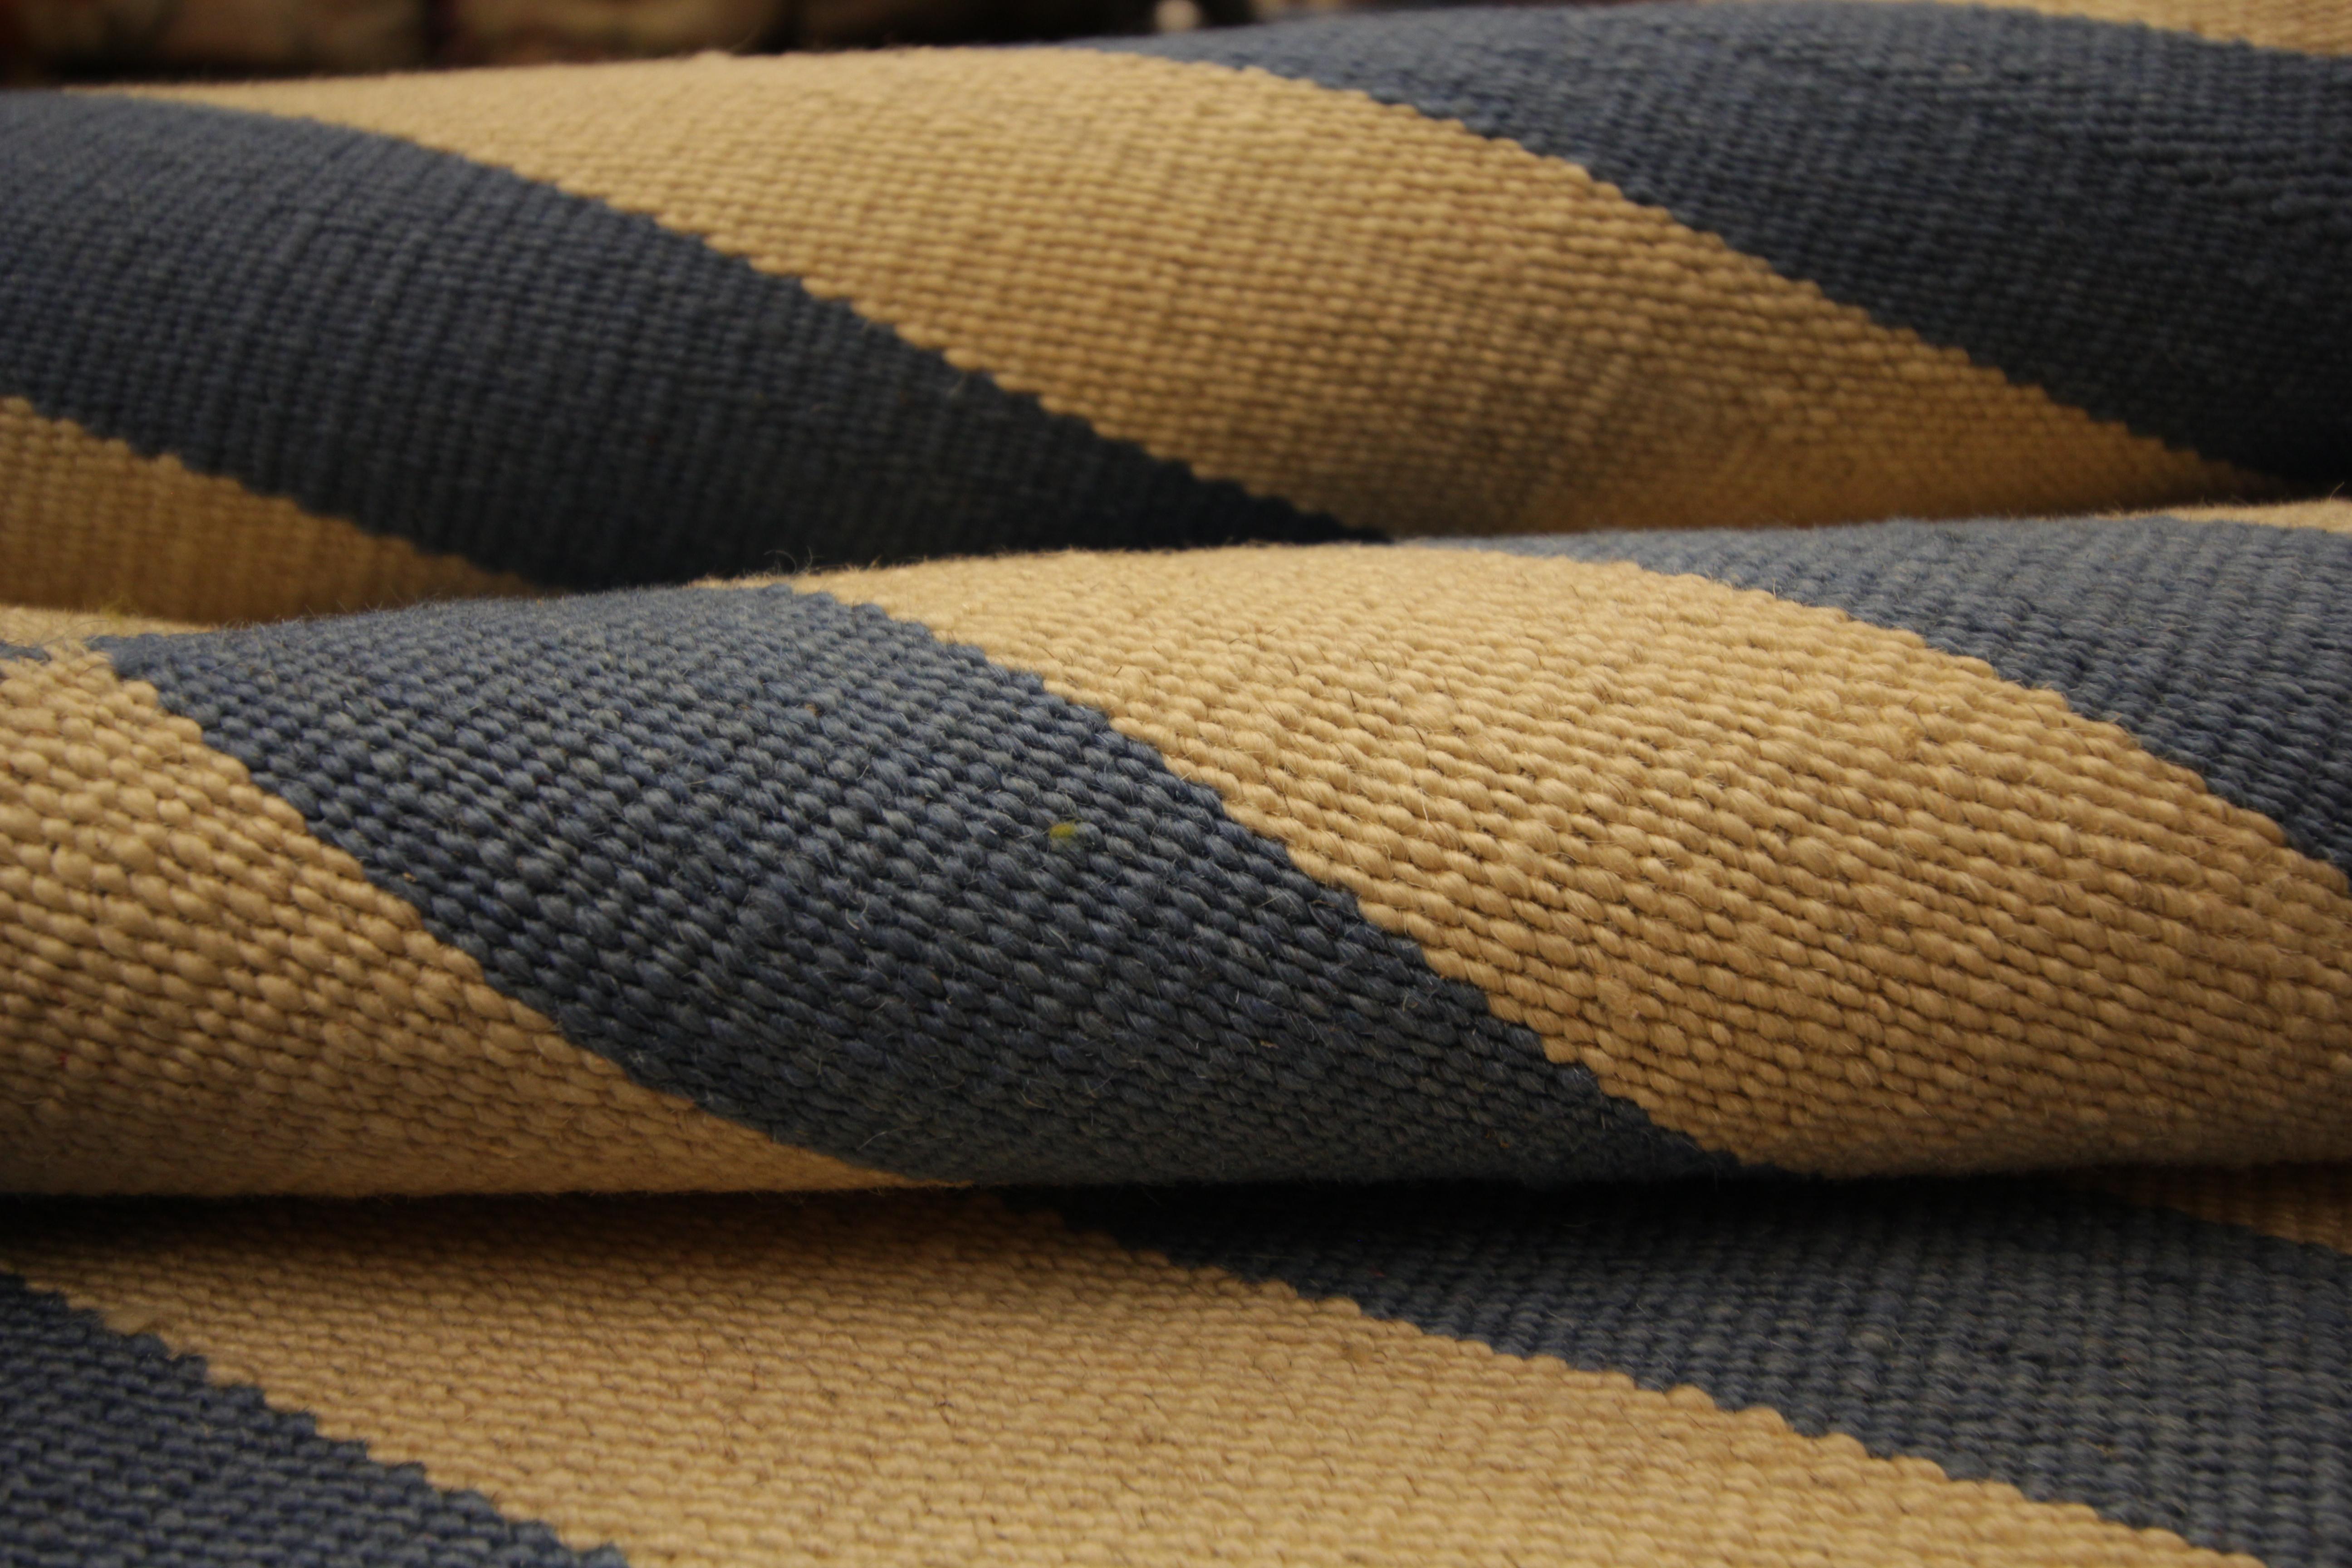 Late 20th Century Modern Striped Kilim Area Rug, Blue Cream Handmade Flat-Woven Carpet